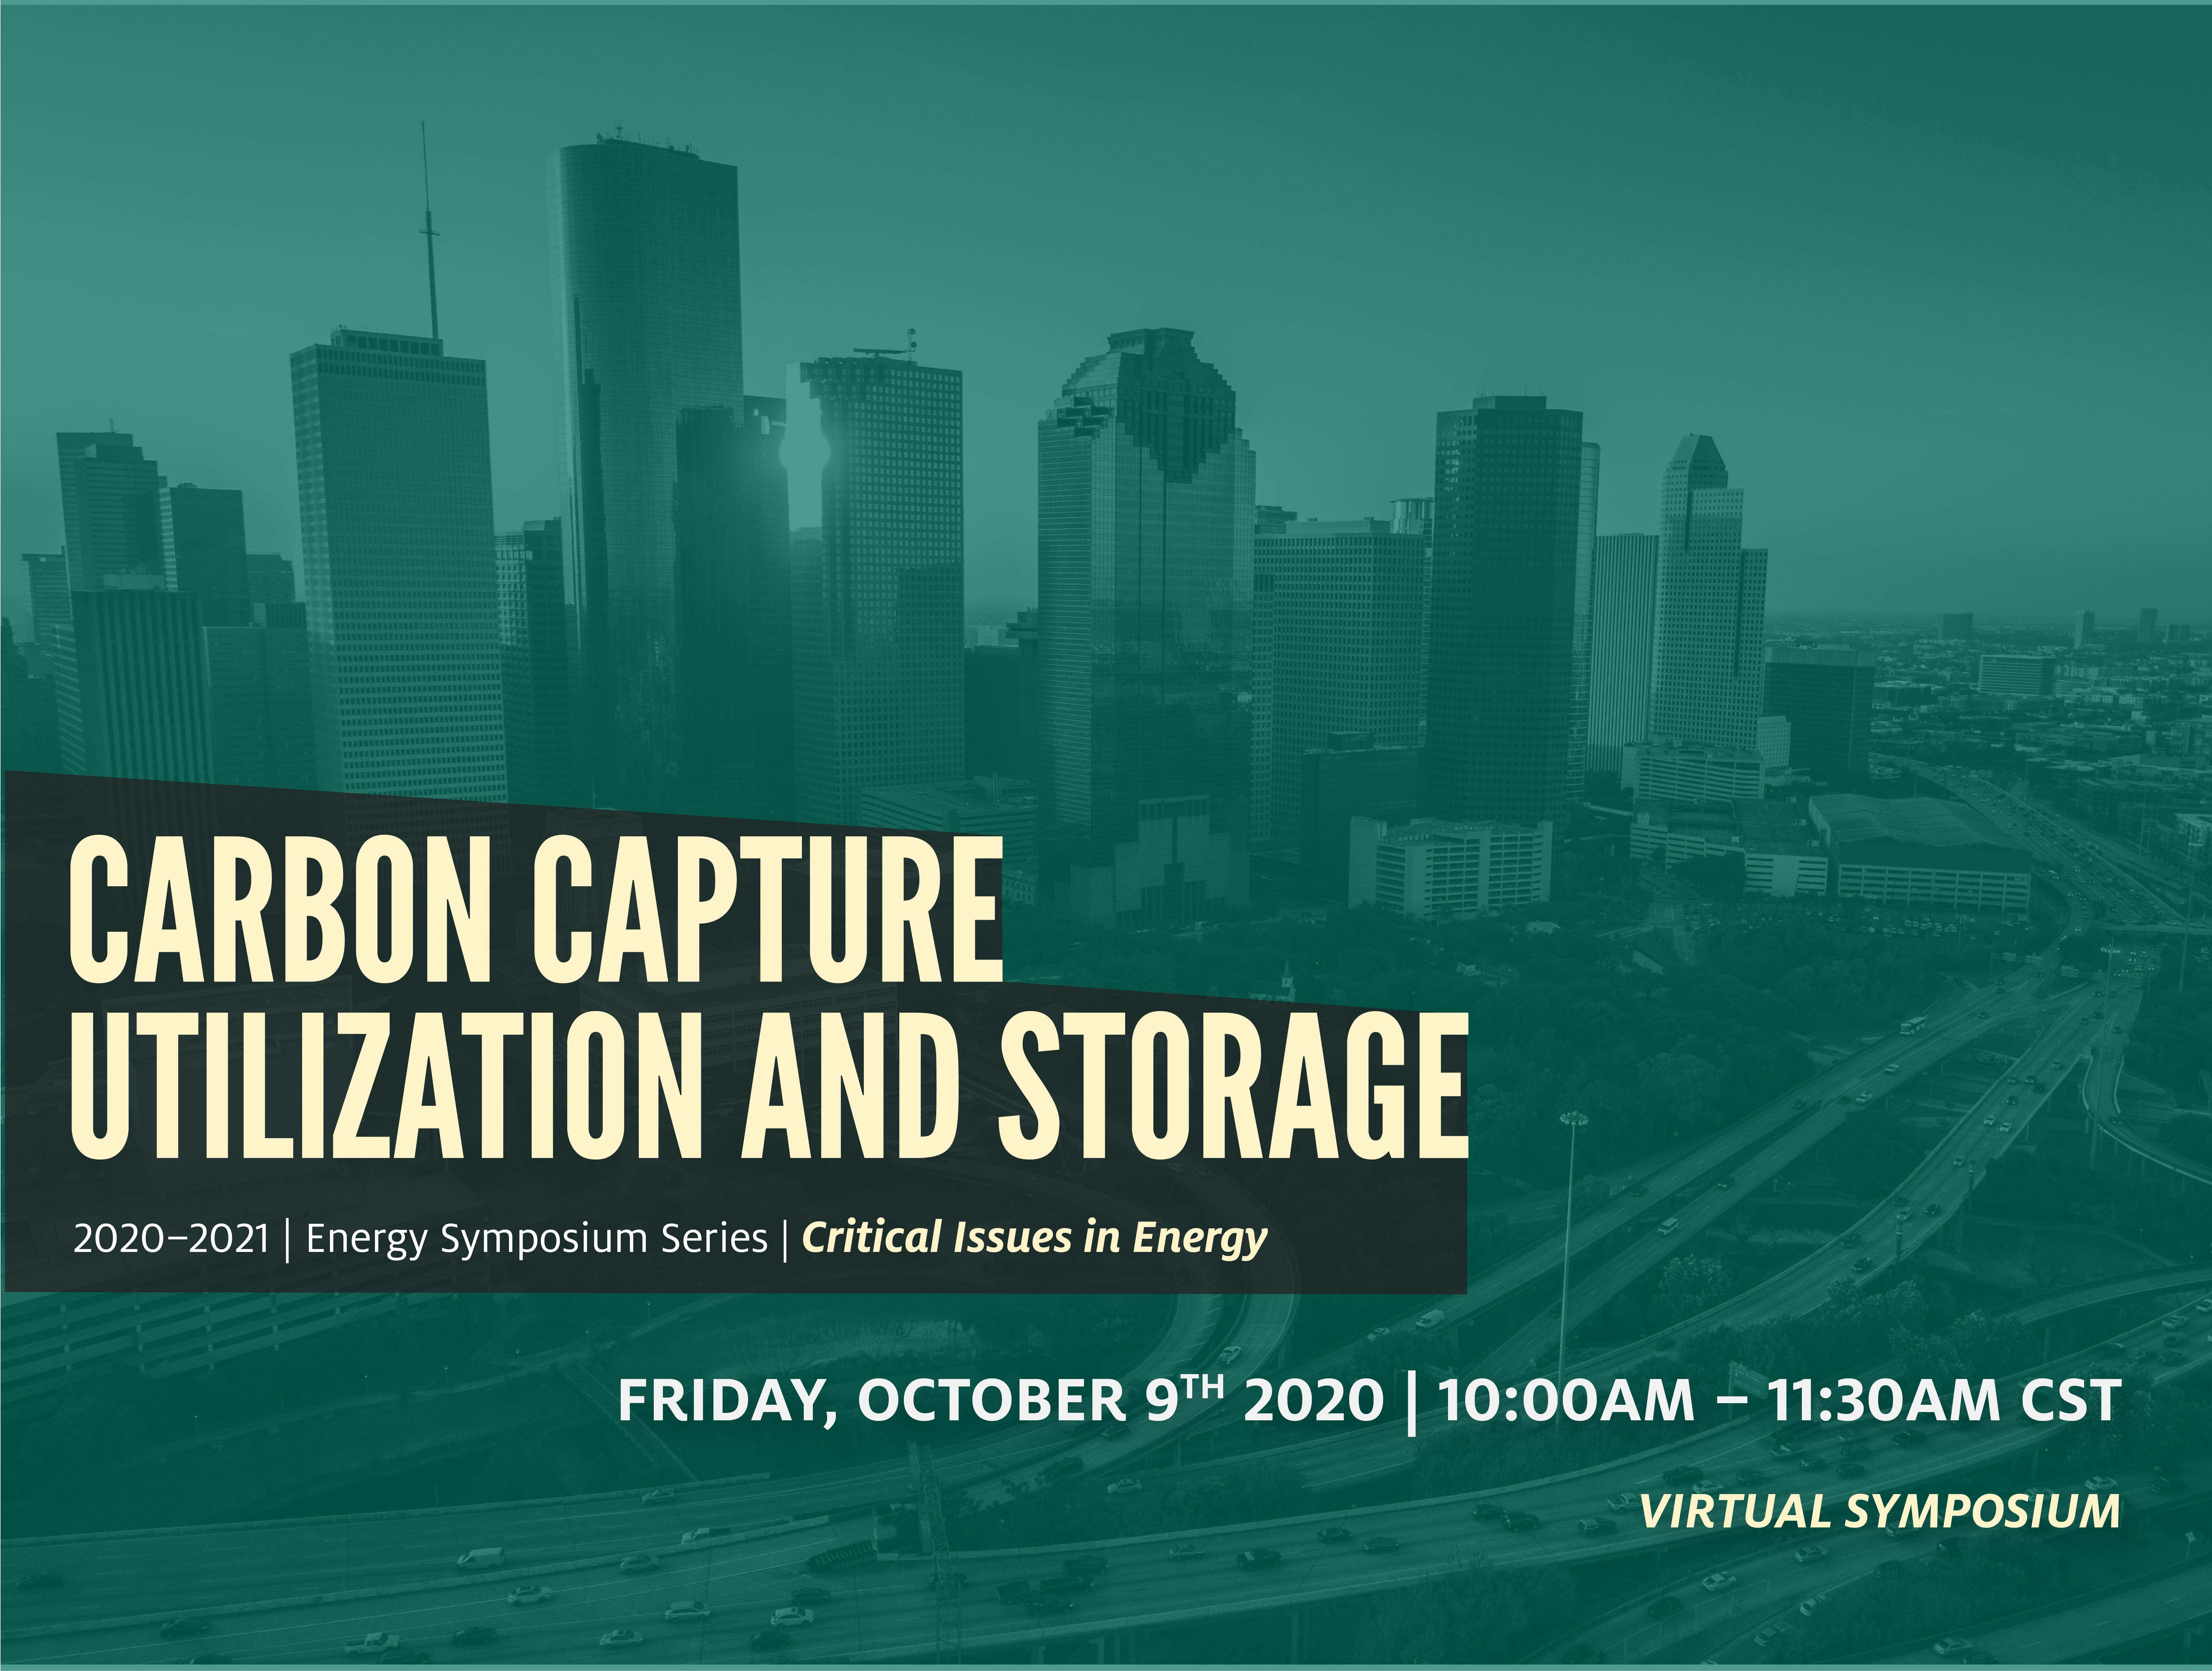 Houston: The Low-Carbon Energy Capital - A Roadmap: Carbon Capture Utilization and Storage